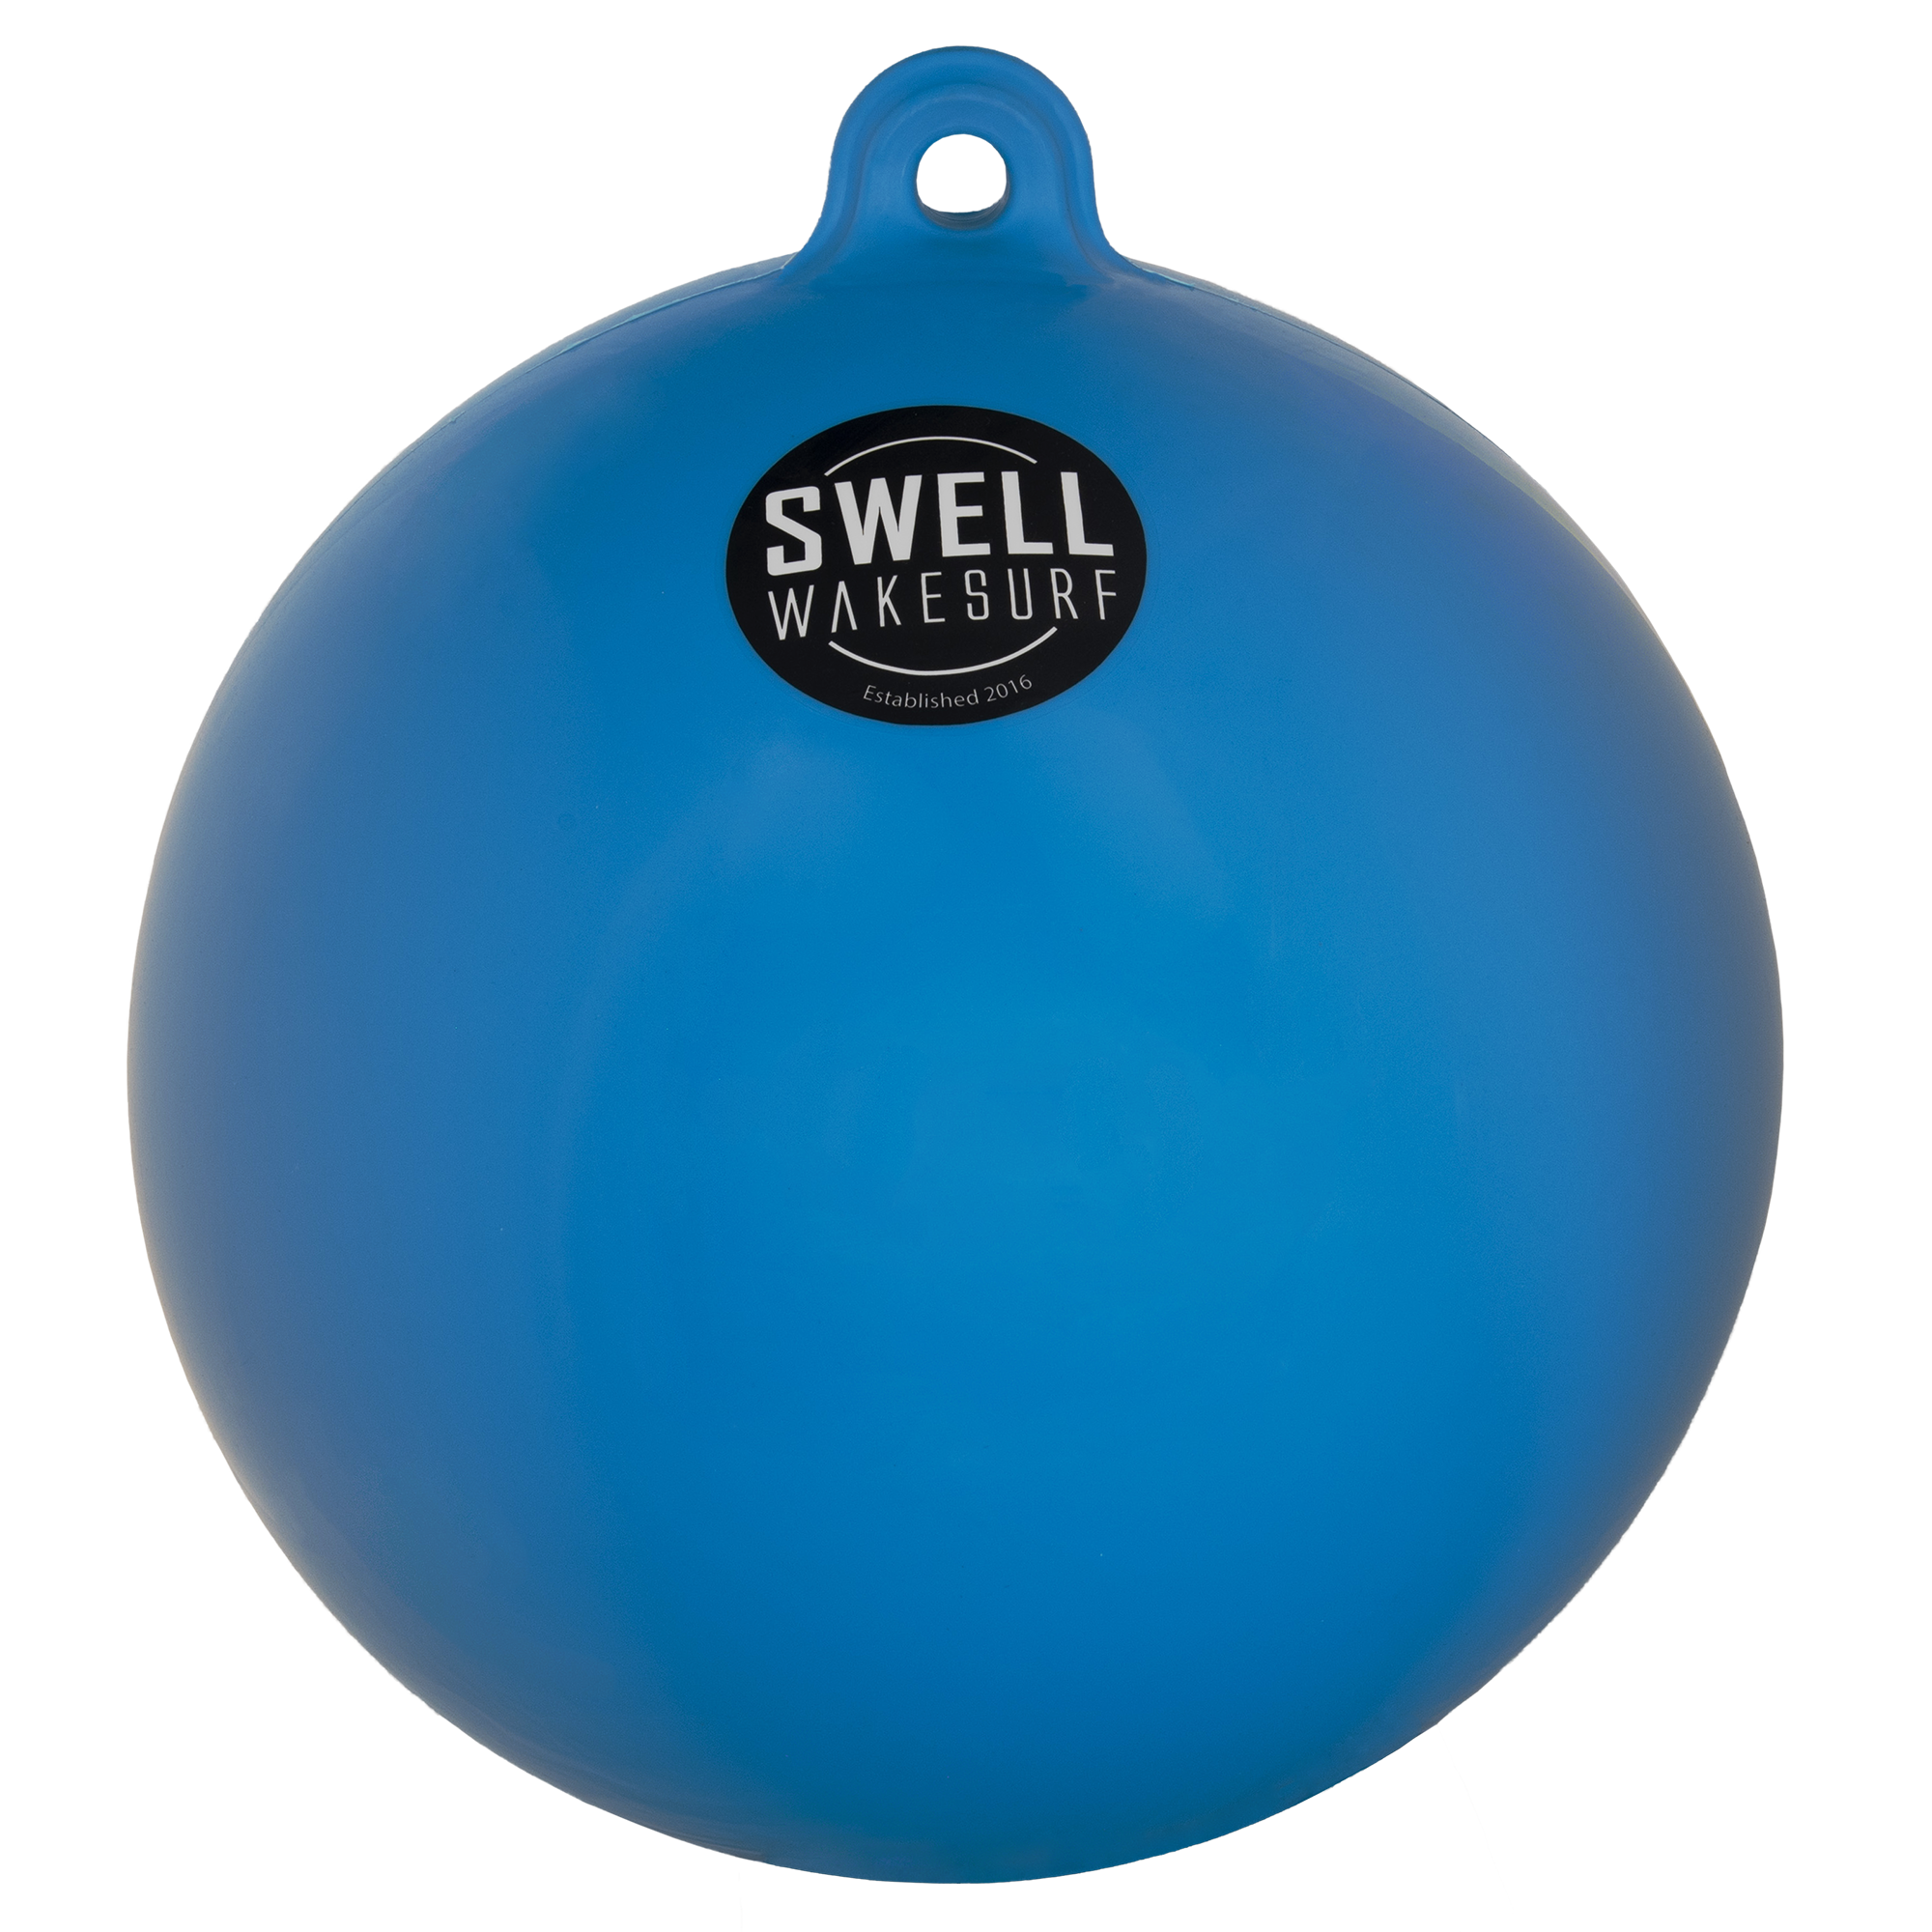 SWELL Wakesurf - Big Bumper Ball - Reef Blue Front 01.png__PID:e57771d1-7a13-4c89-8e9f-e15fabba286c